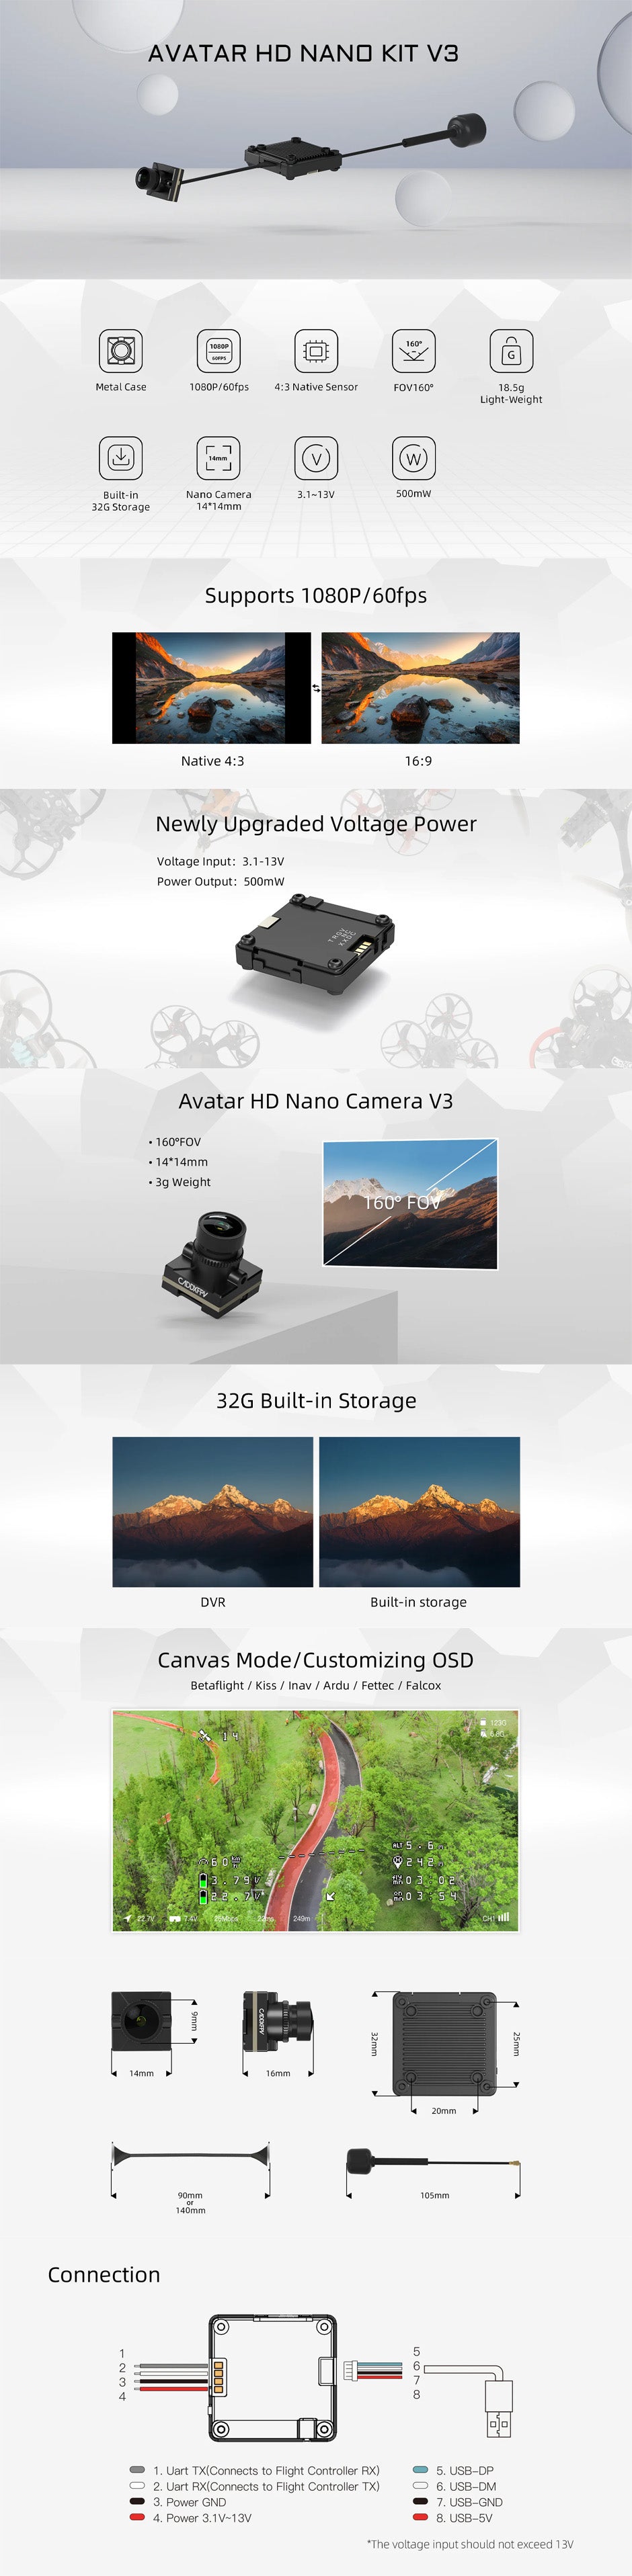 Description of the Walksnail Avatar HD Nano Kit V3